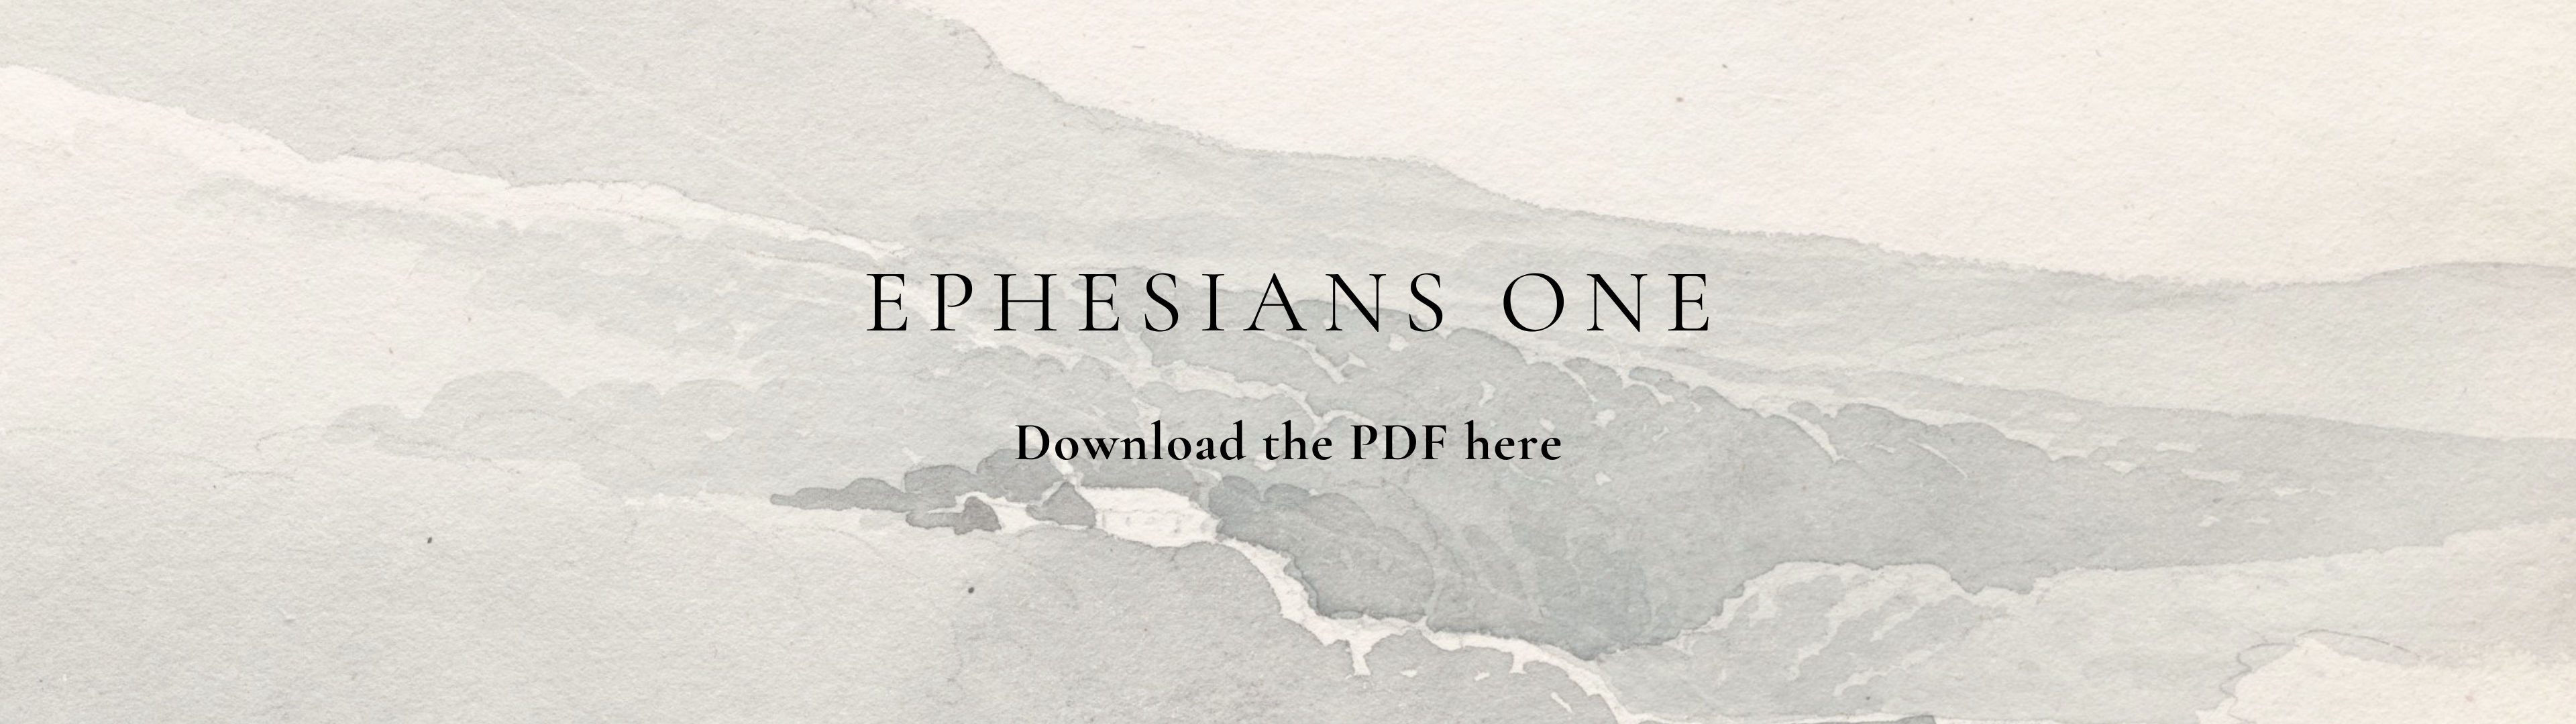 Ephesians web banner